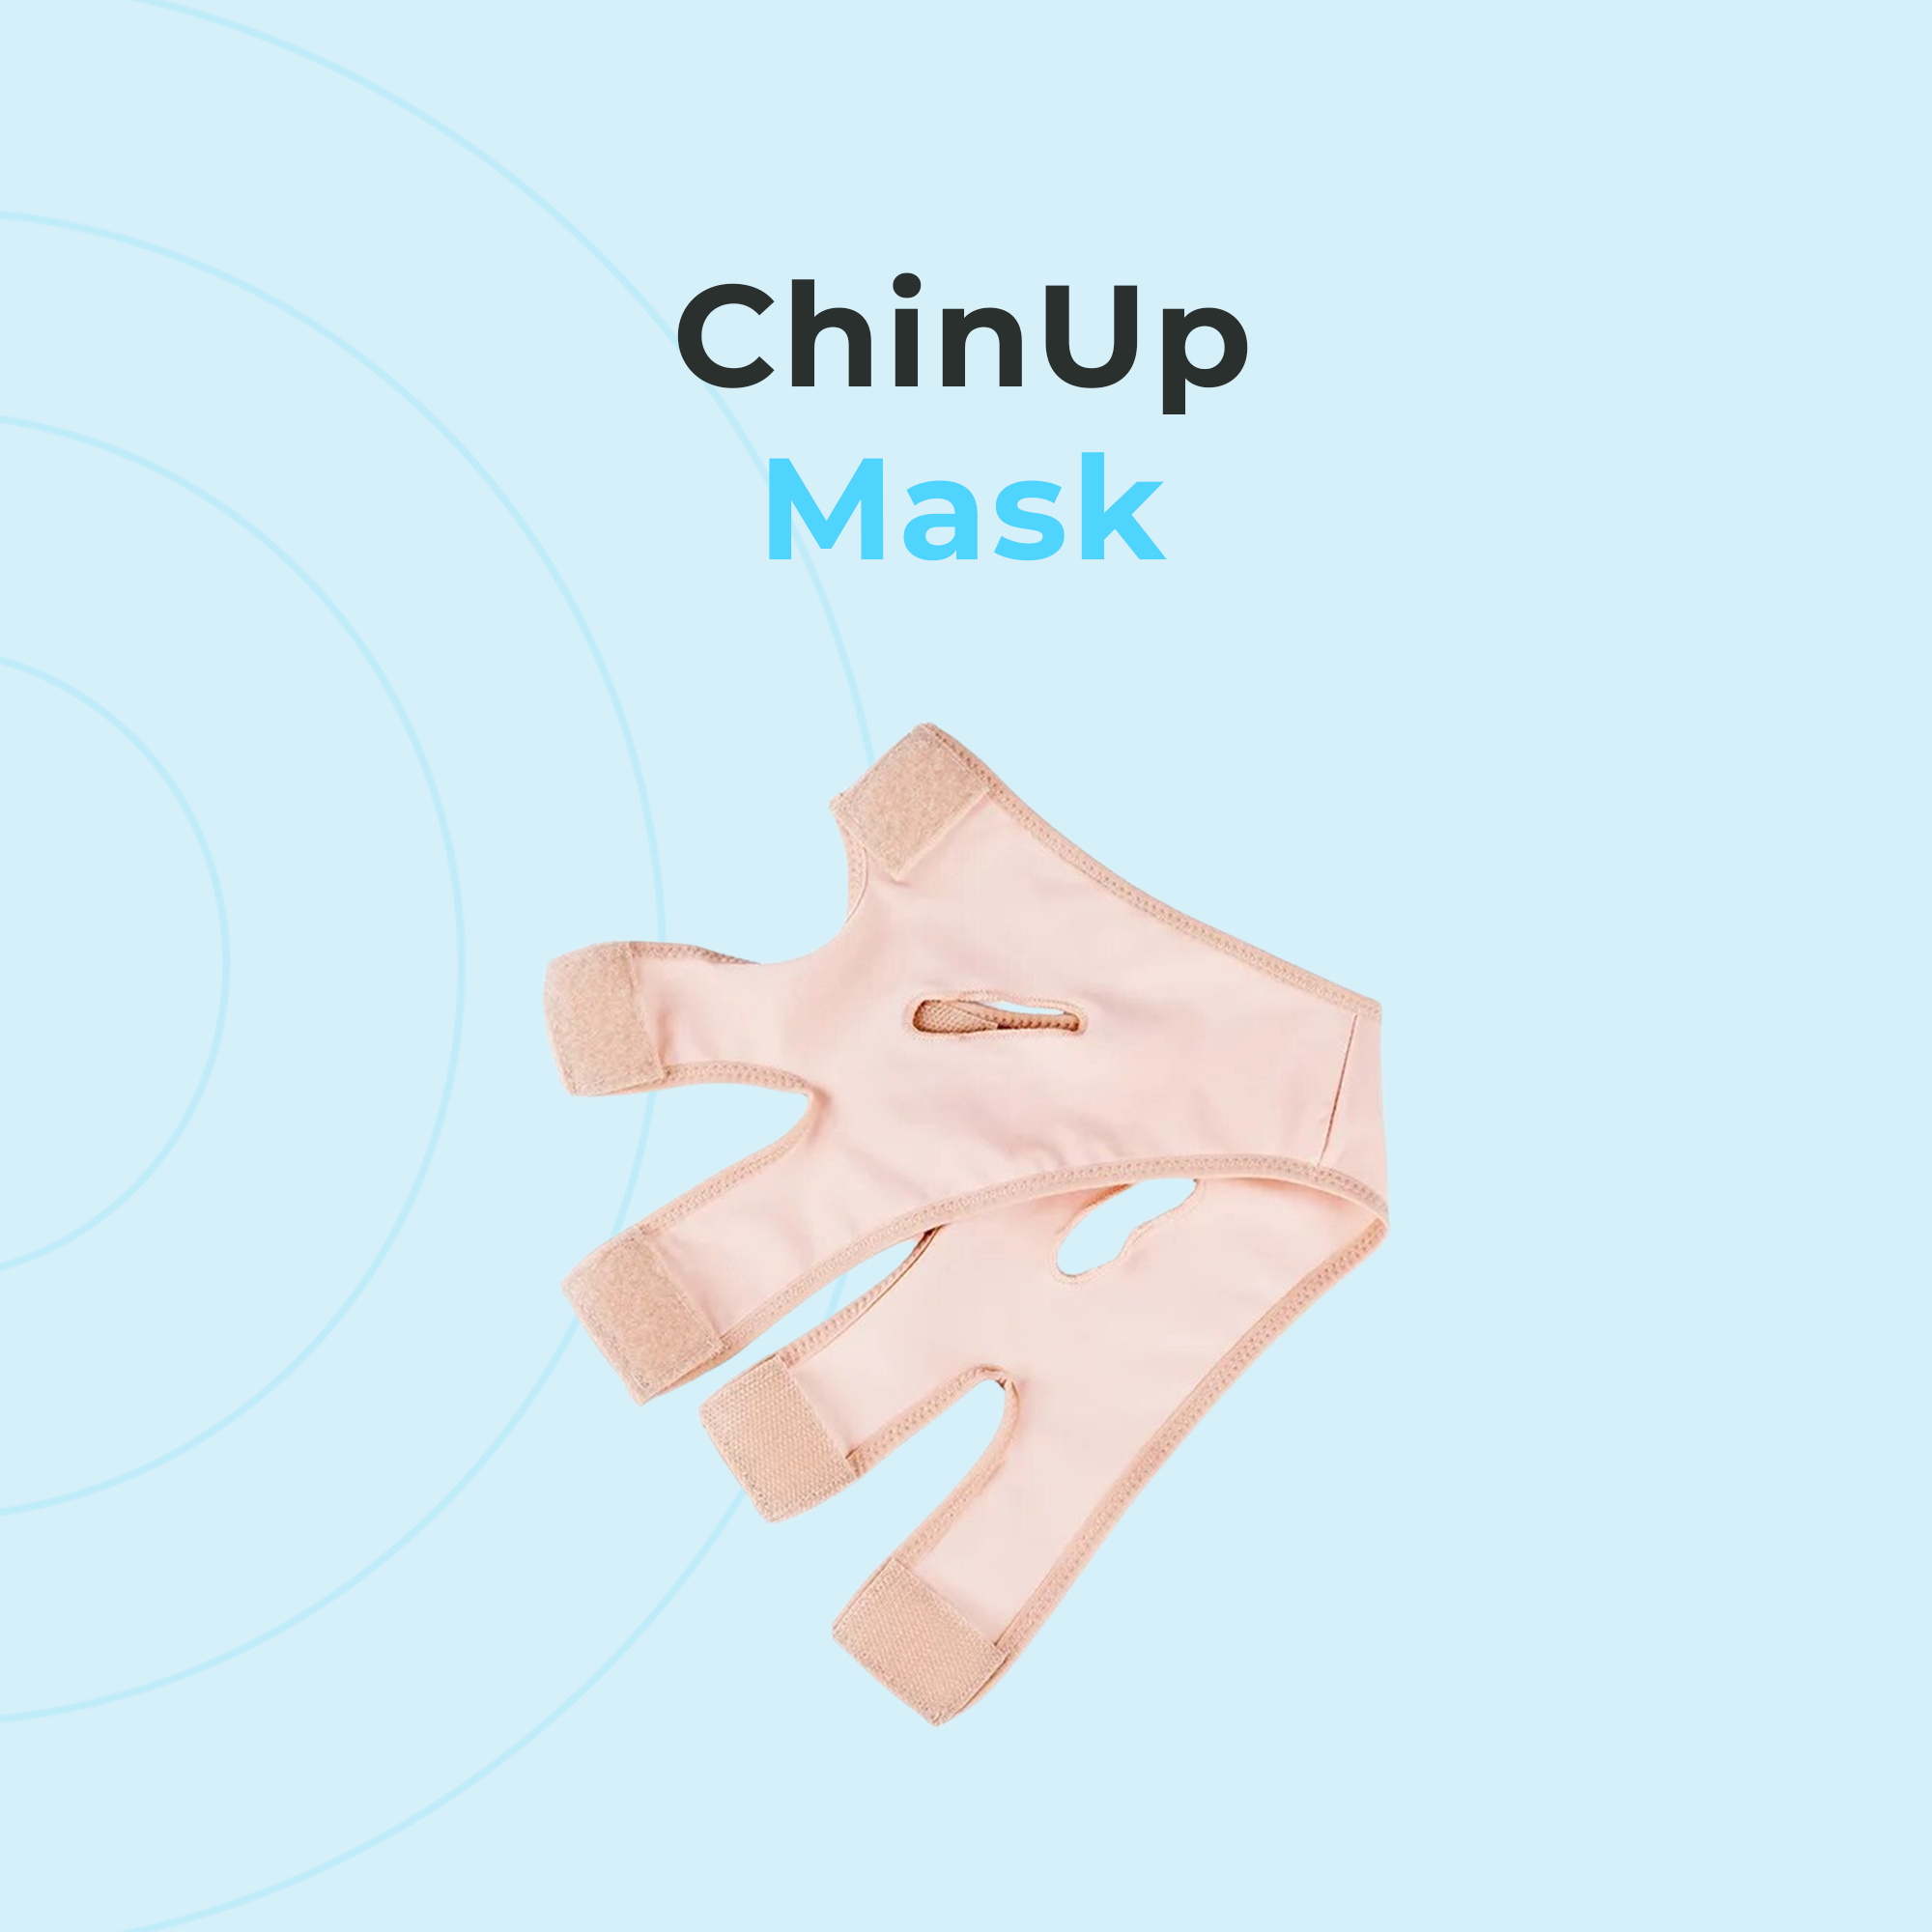 ChinUp Mask